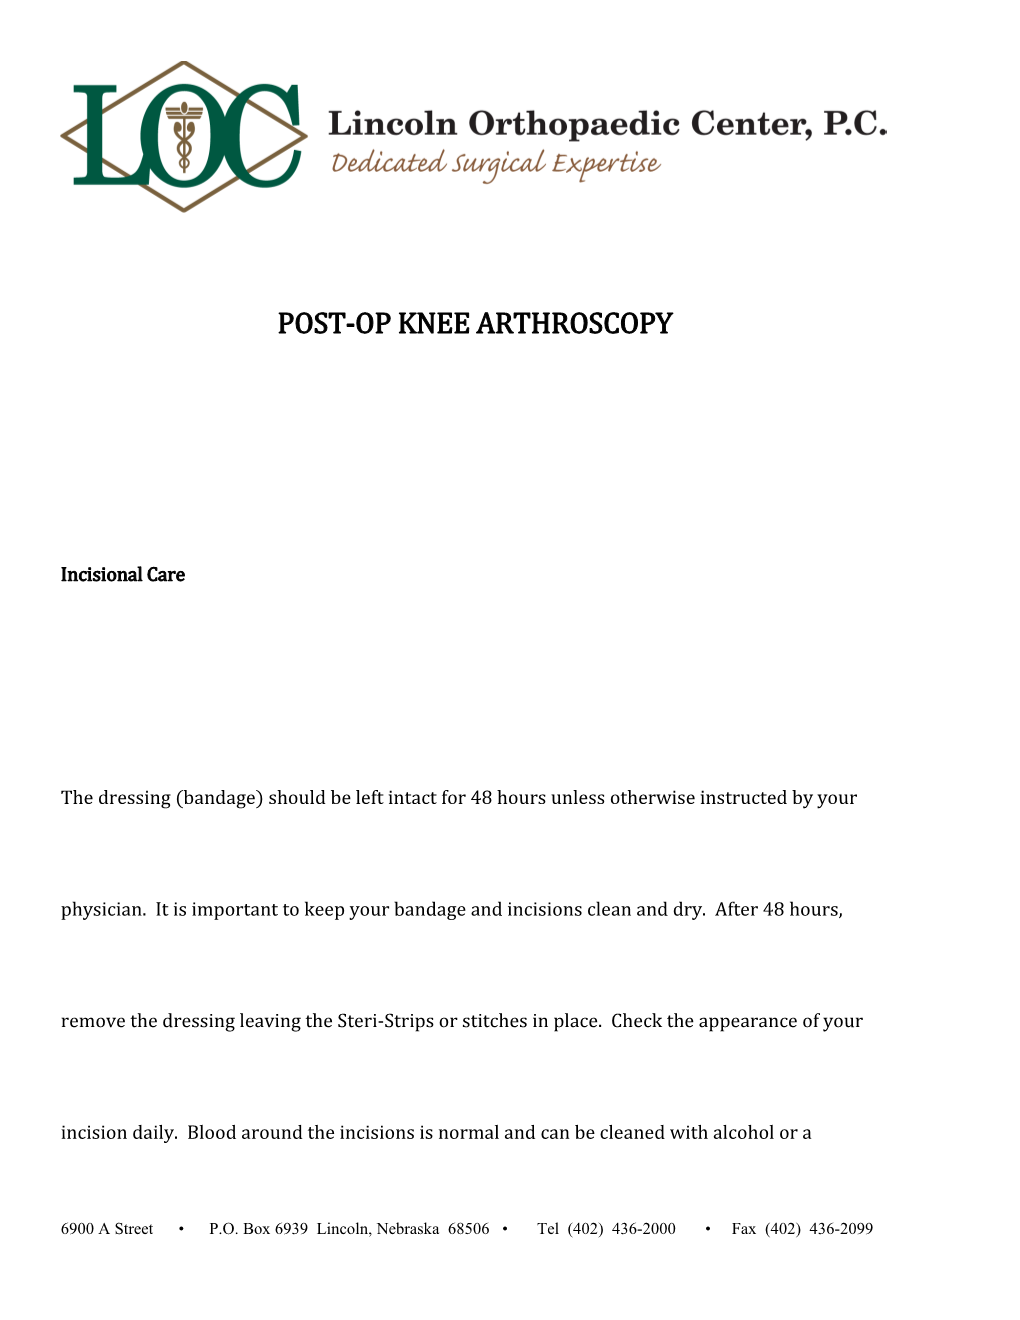 Post-Op Knee Arthroscopy